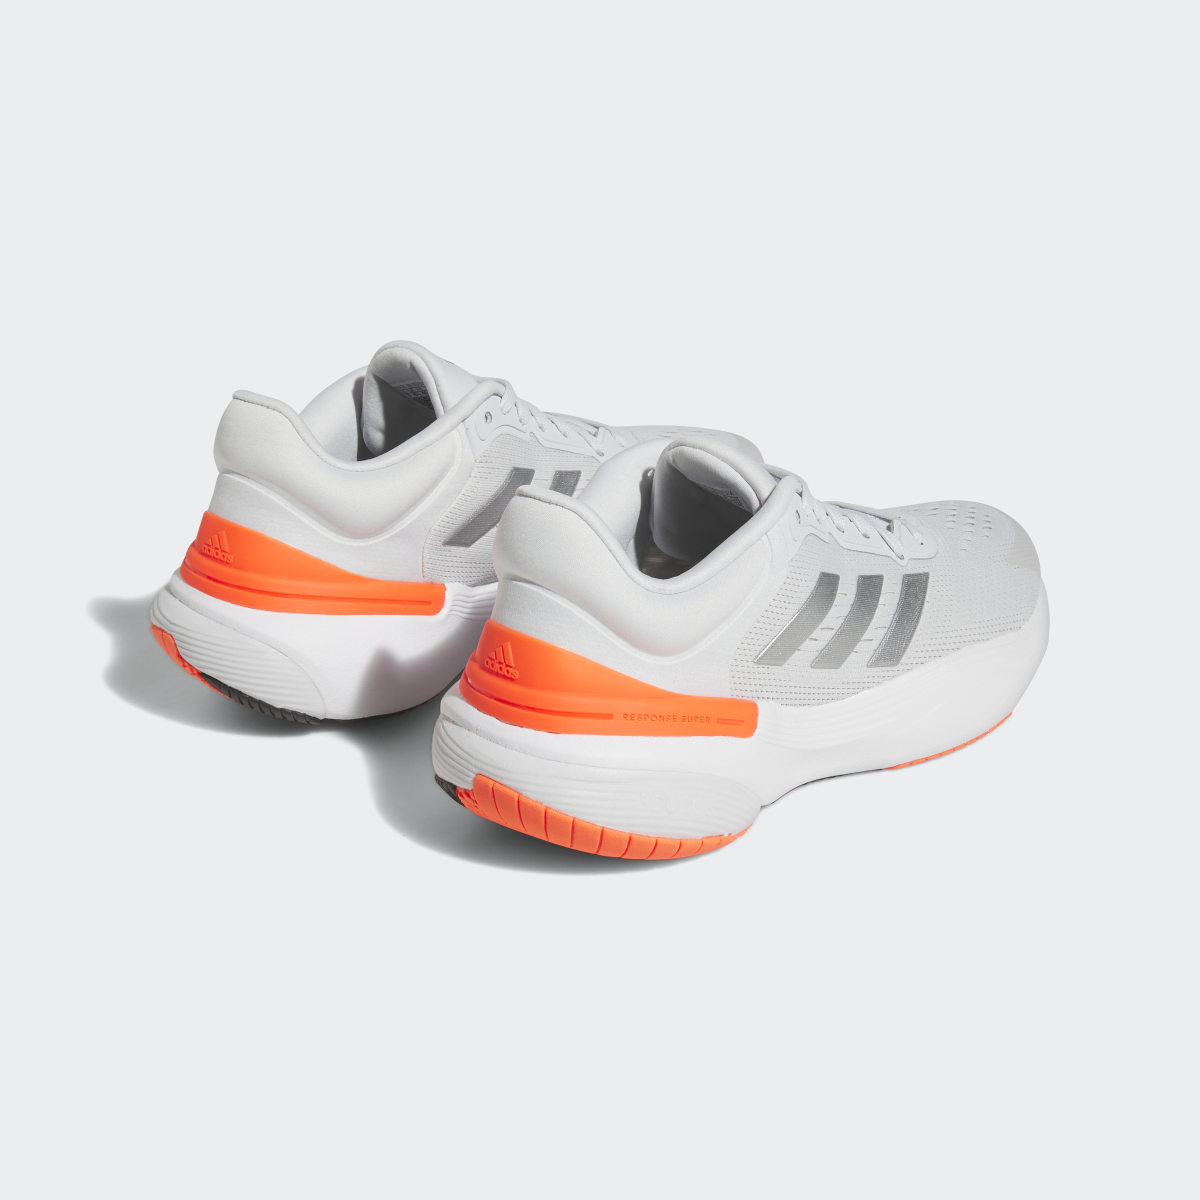 Adidas Response Super 3.0 Running Shoes. 6